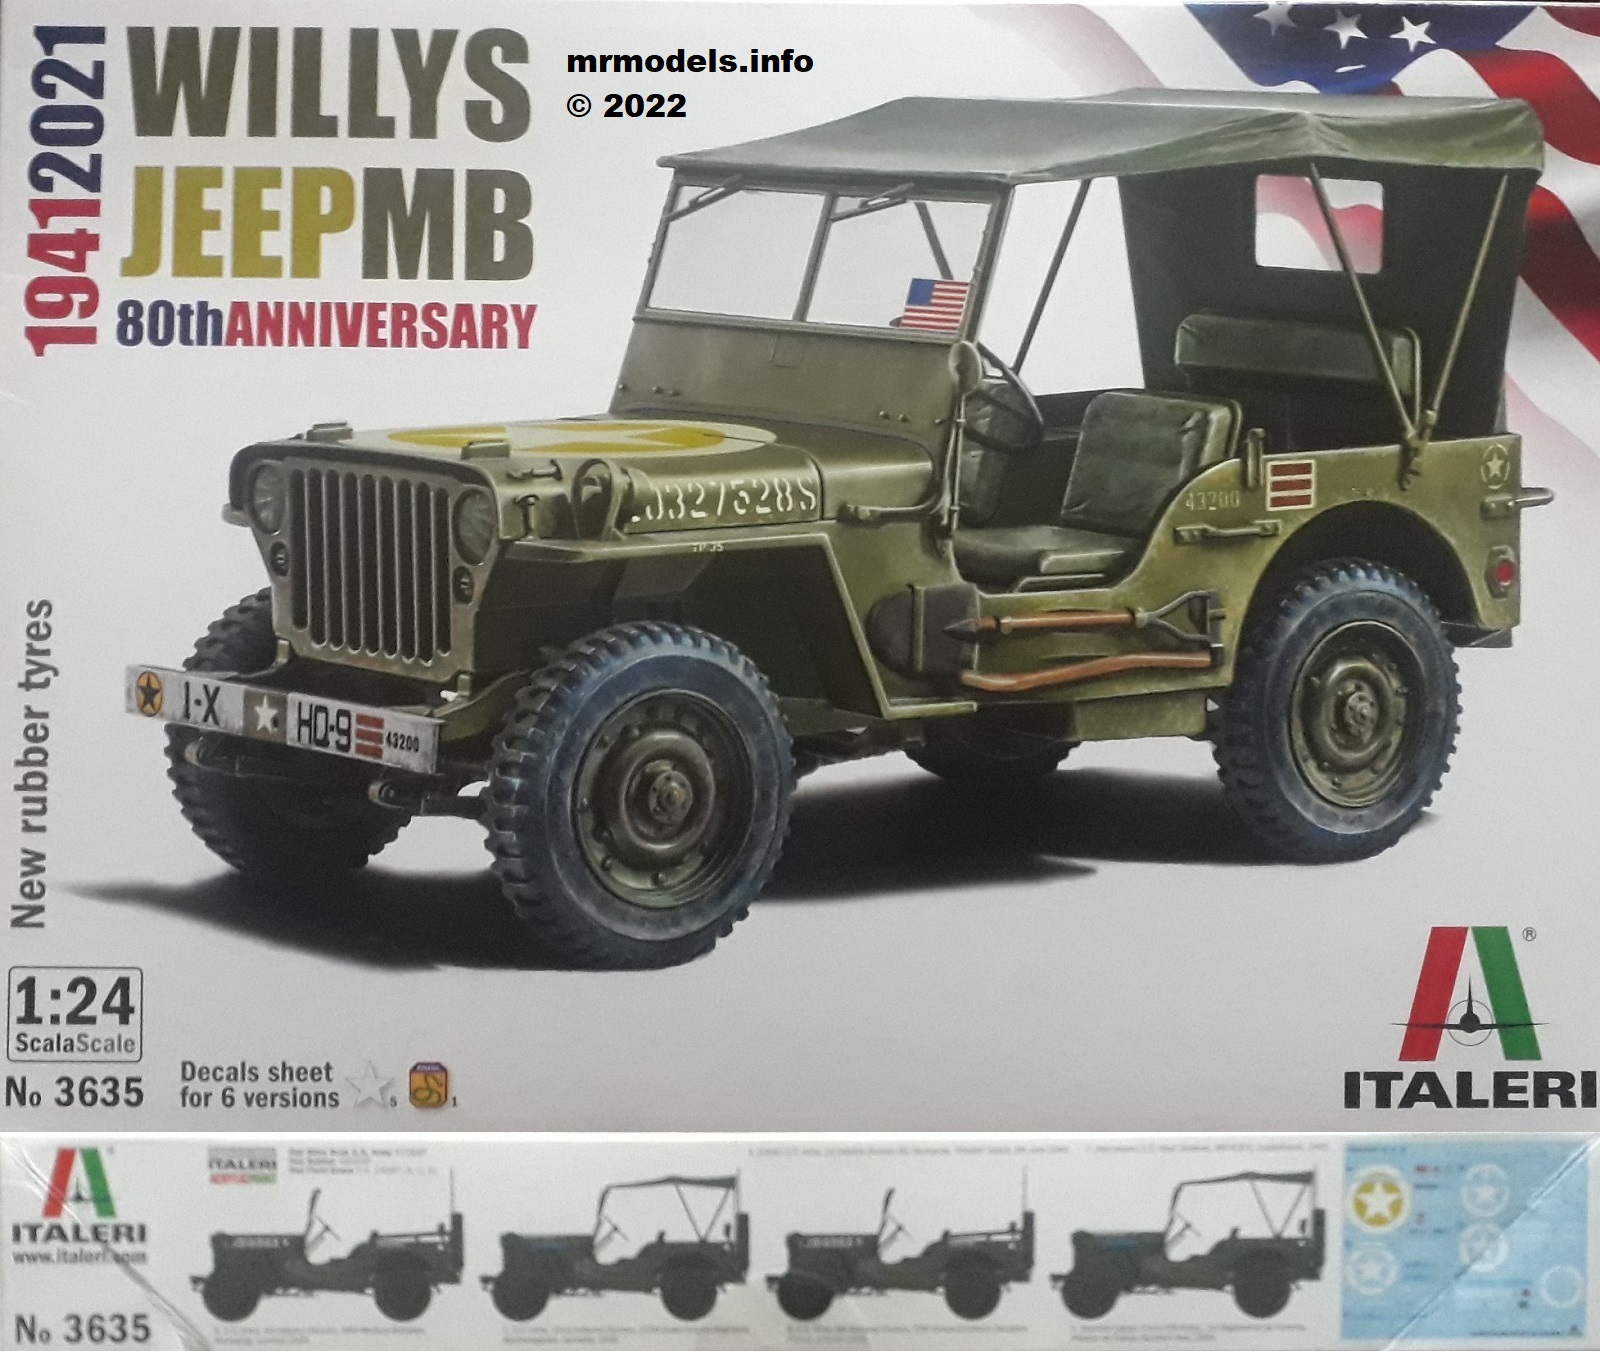 Italeri Willys Jeep MB